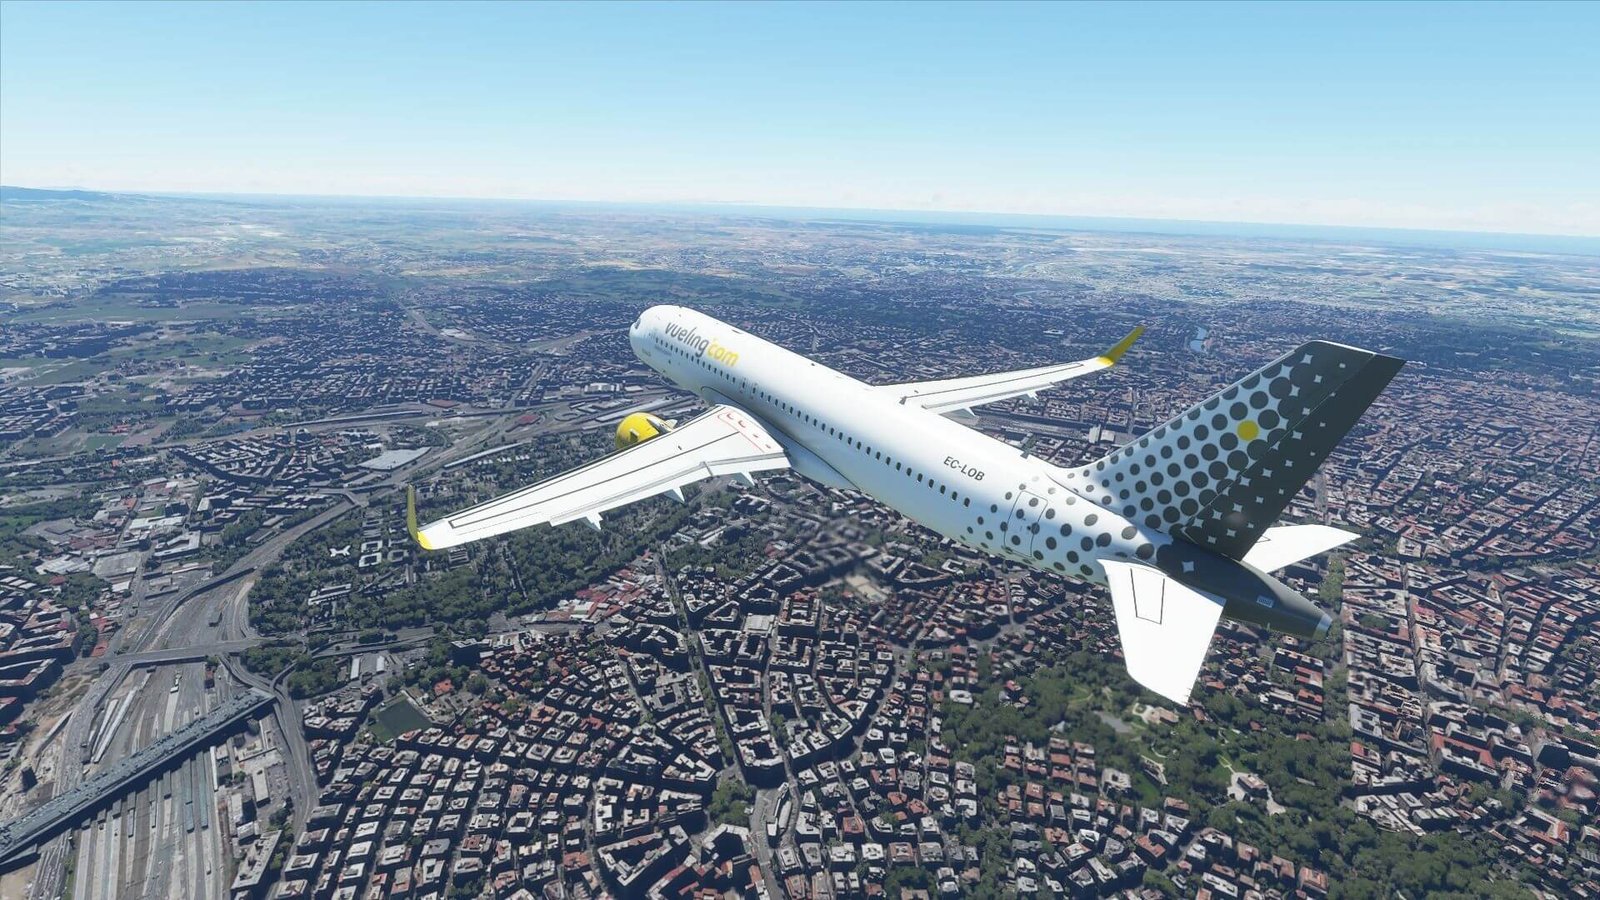 Review – Microsoft Flight Simulator